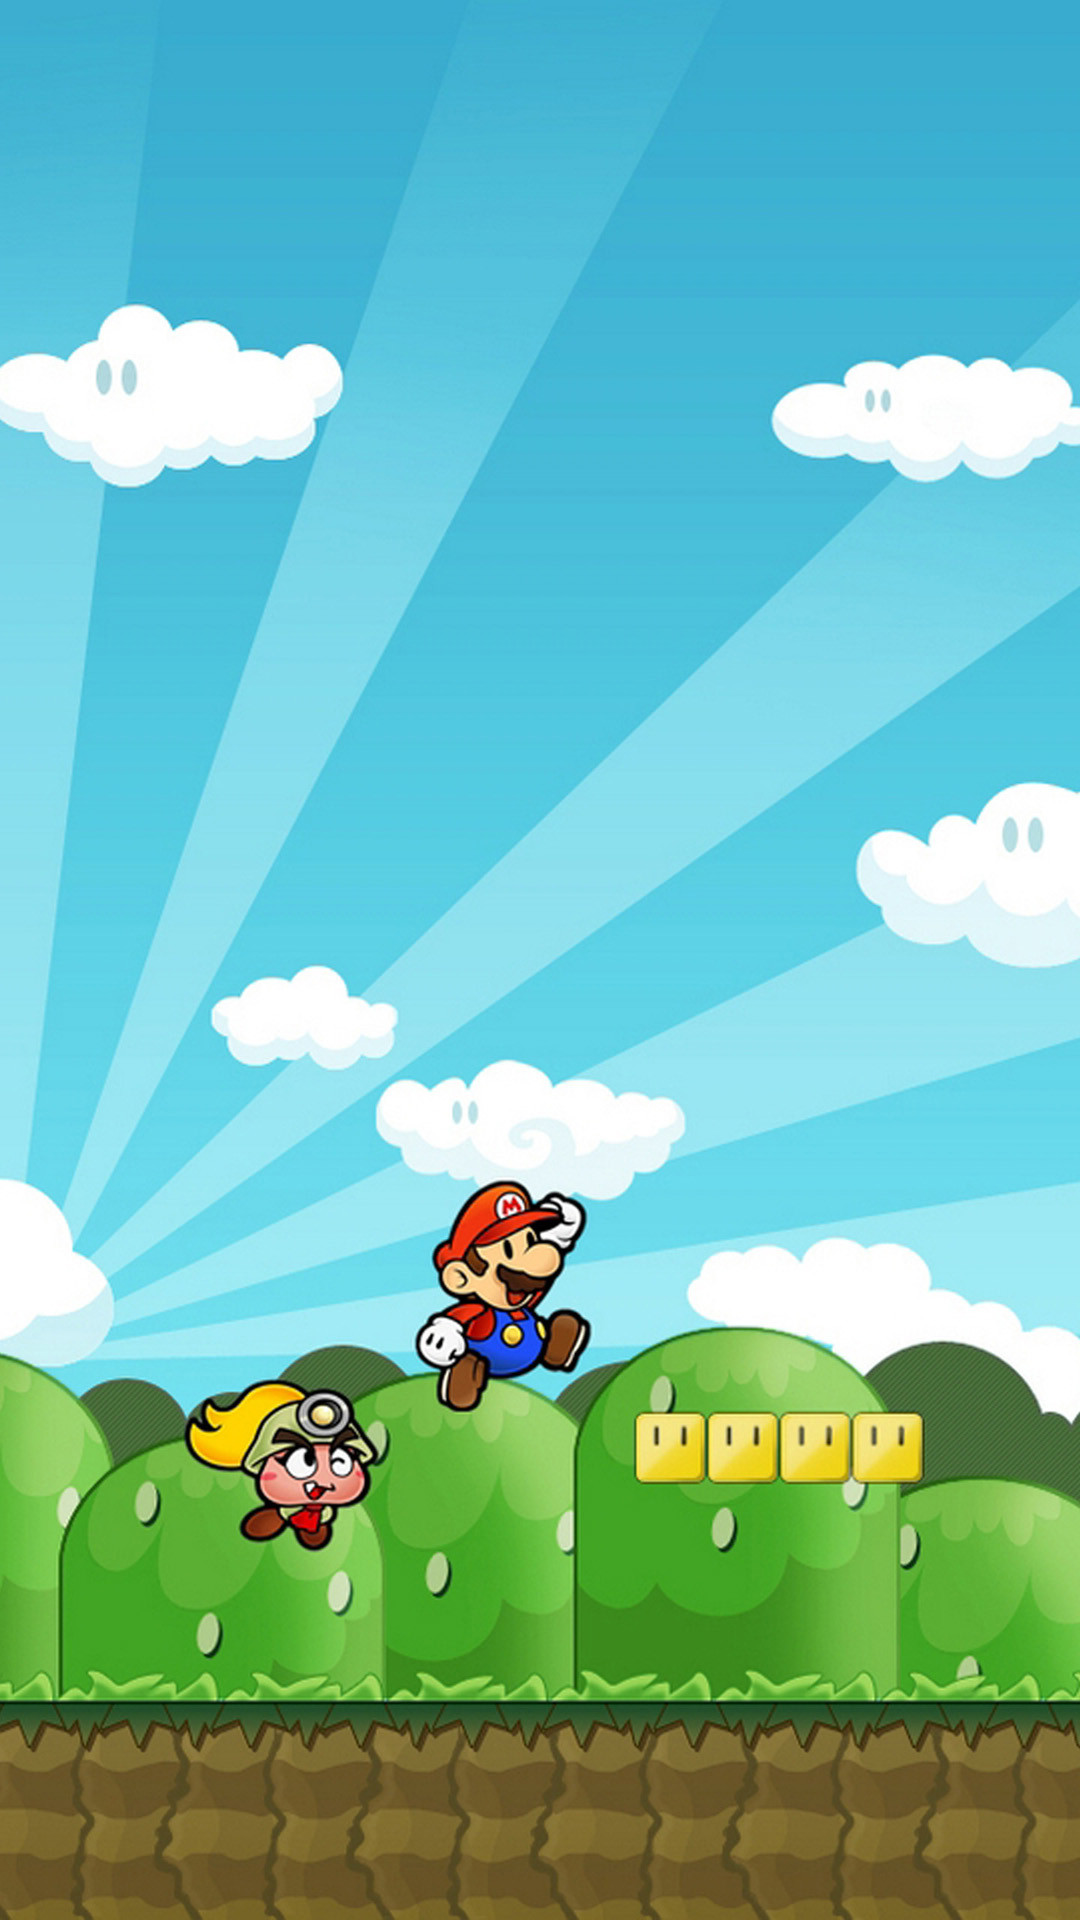 Mario IPhone Wallpaper.